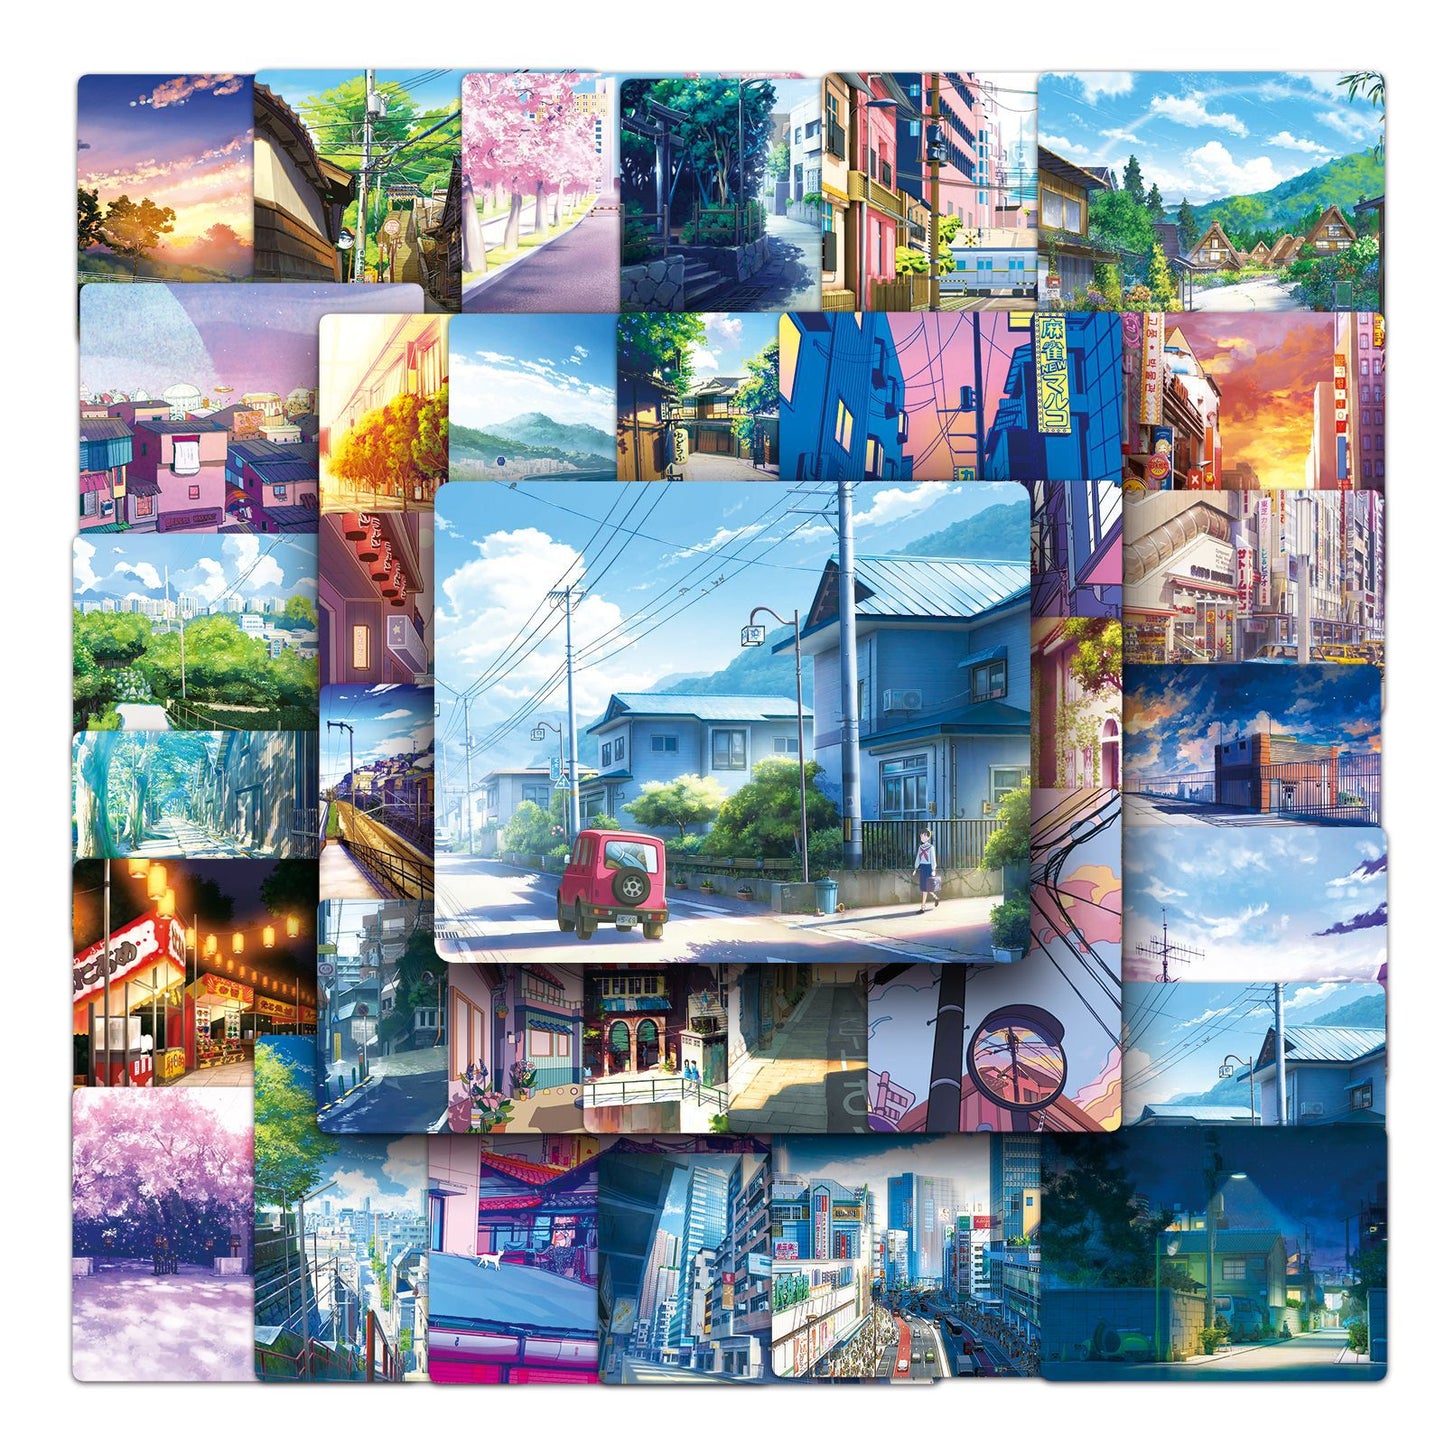 Anime Landscape Stickers 50pcs - 50 different stickers